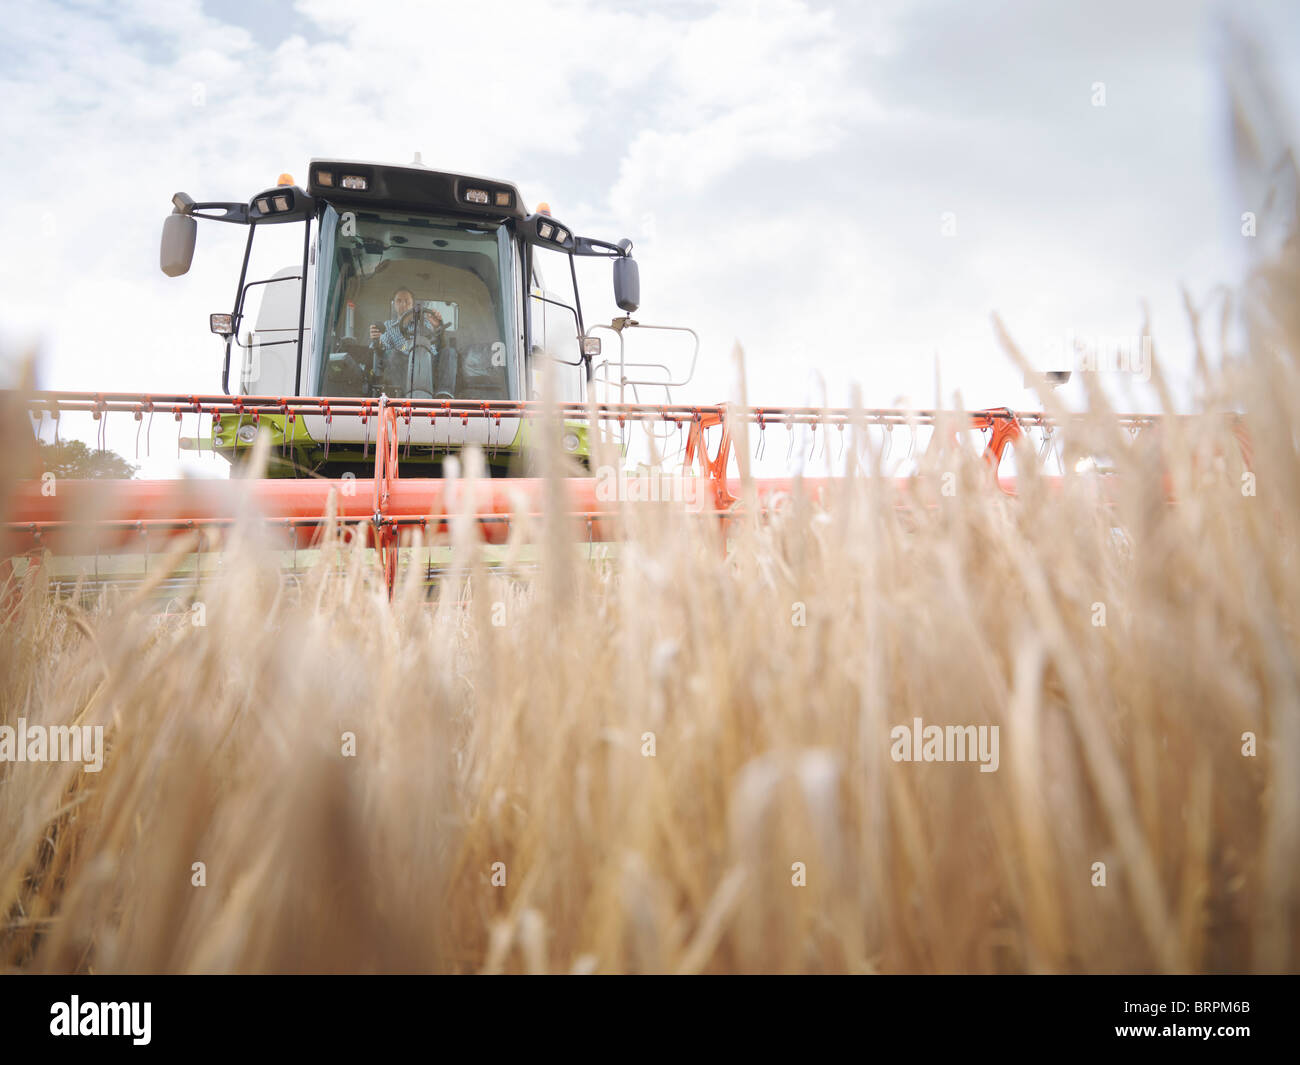 Farmer driving combine harvester Banque D'Images